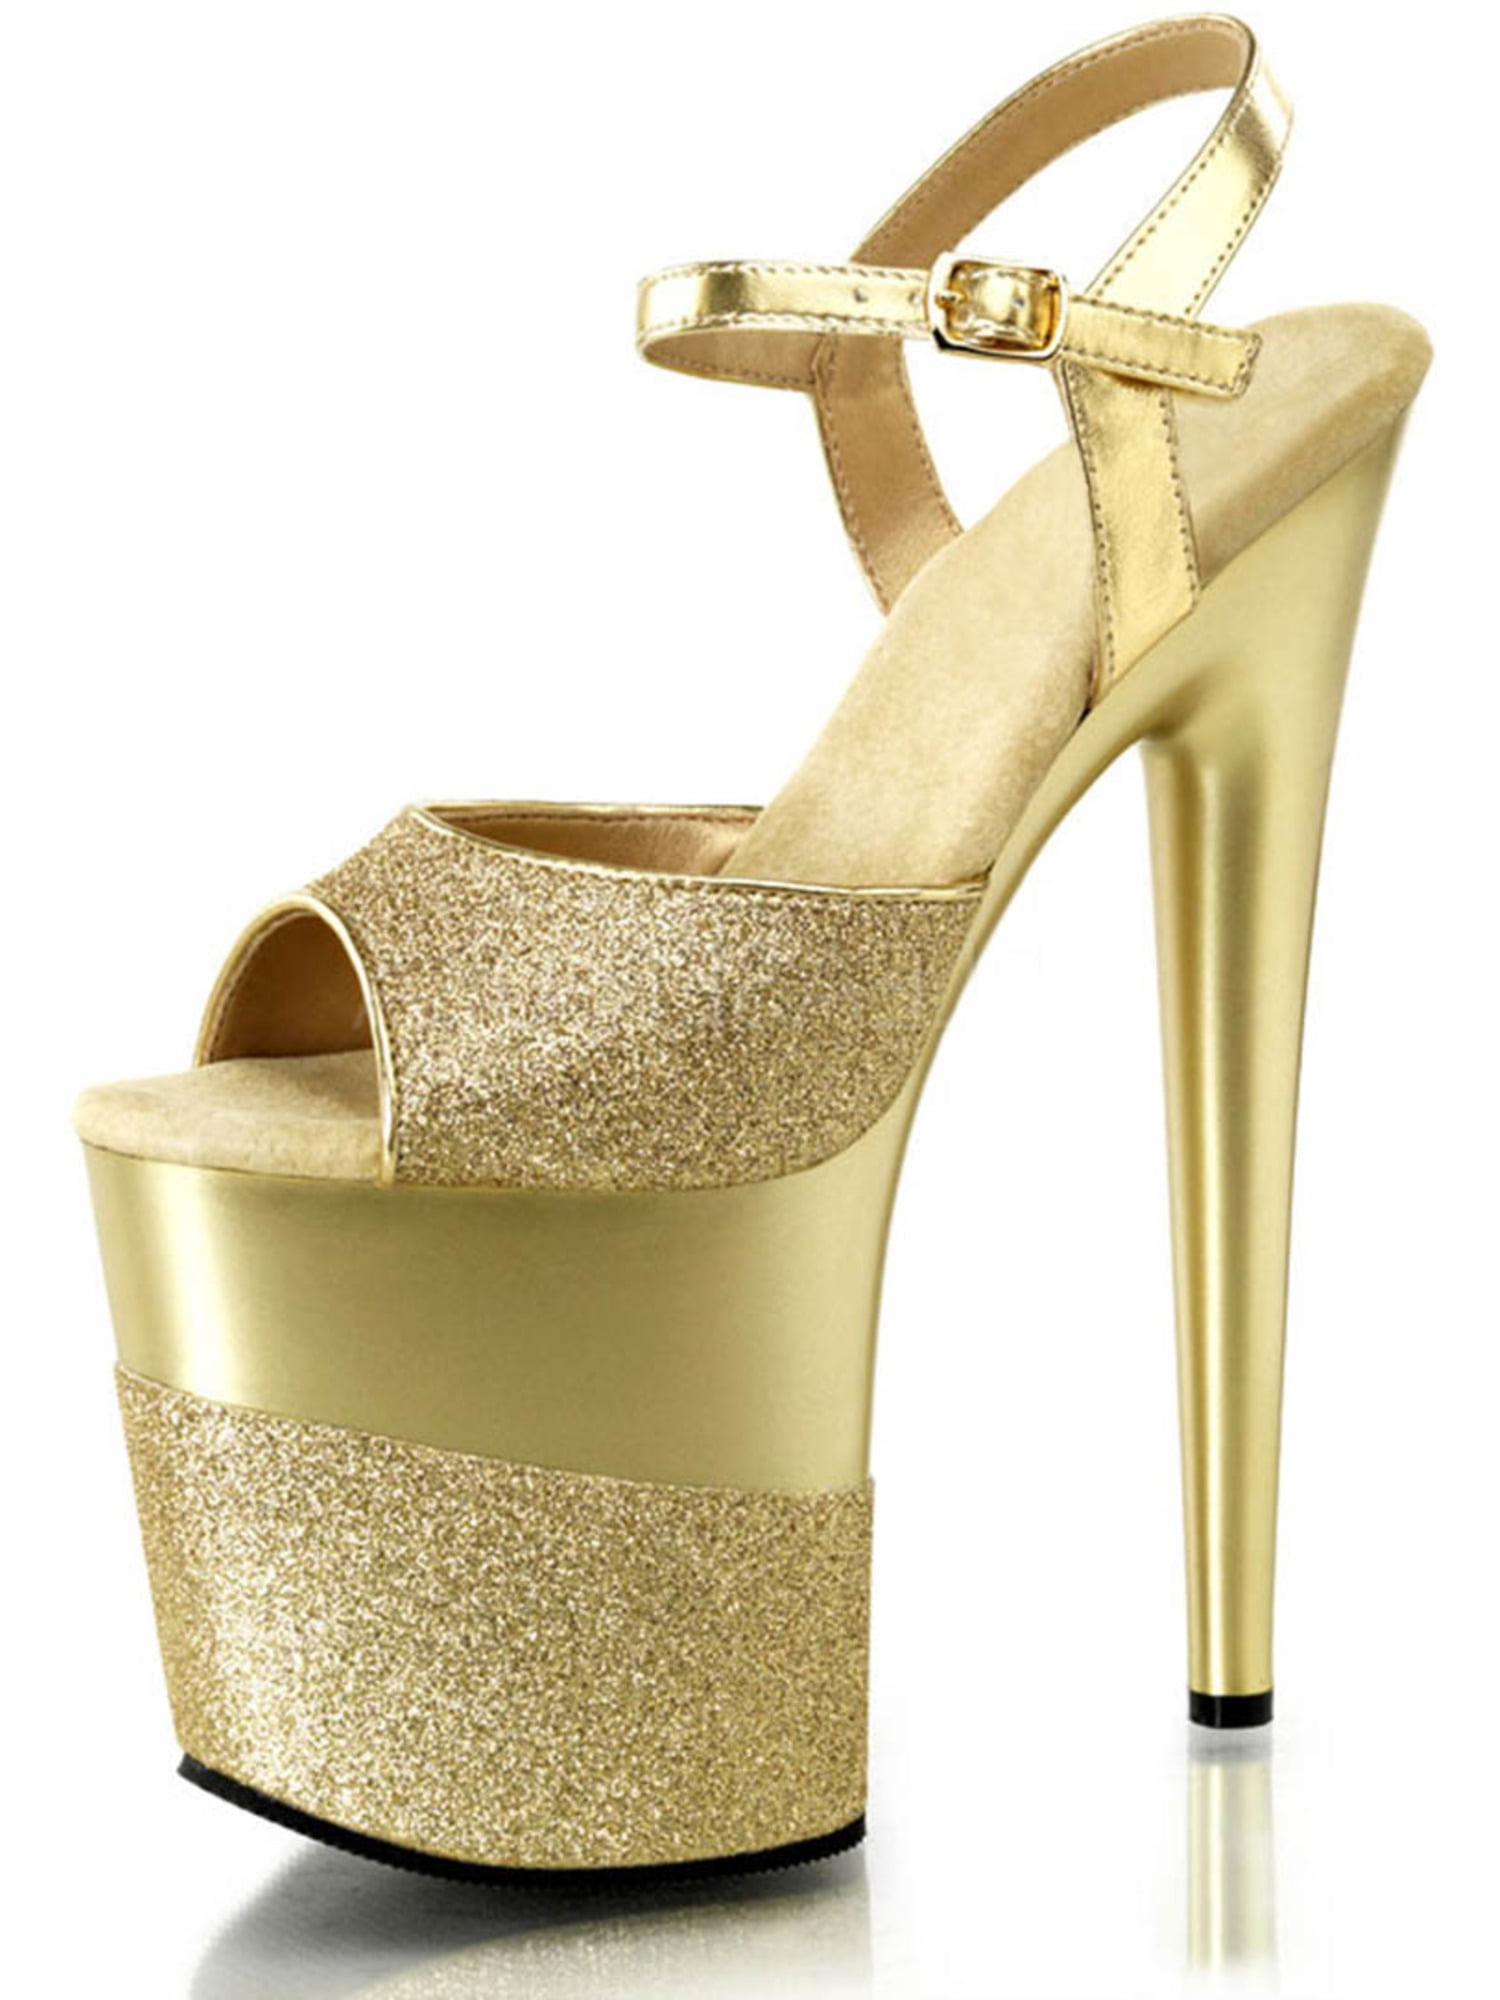 Buy > high heels gold glitter > in stock